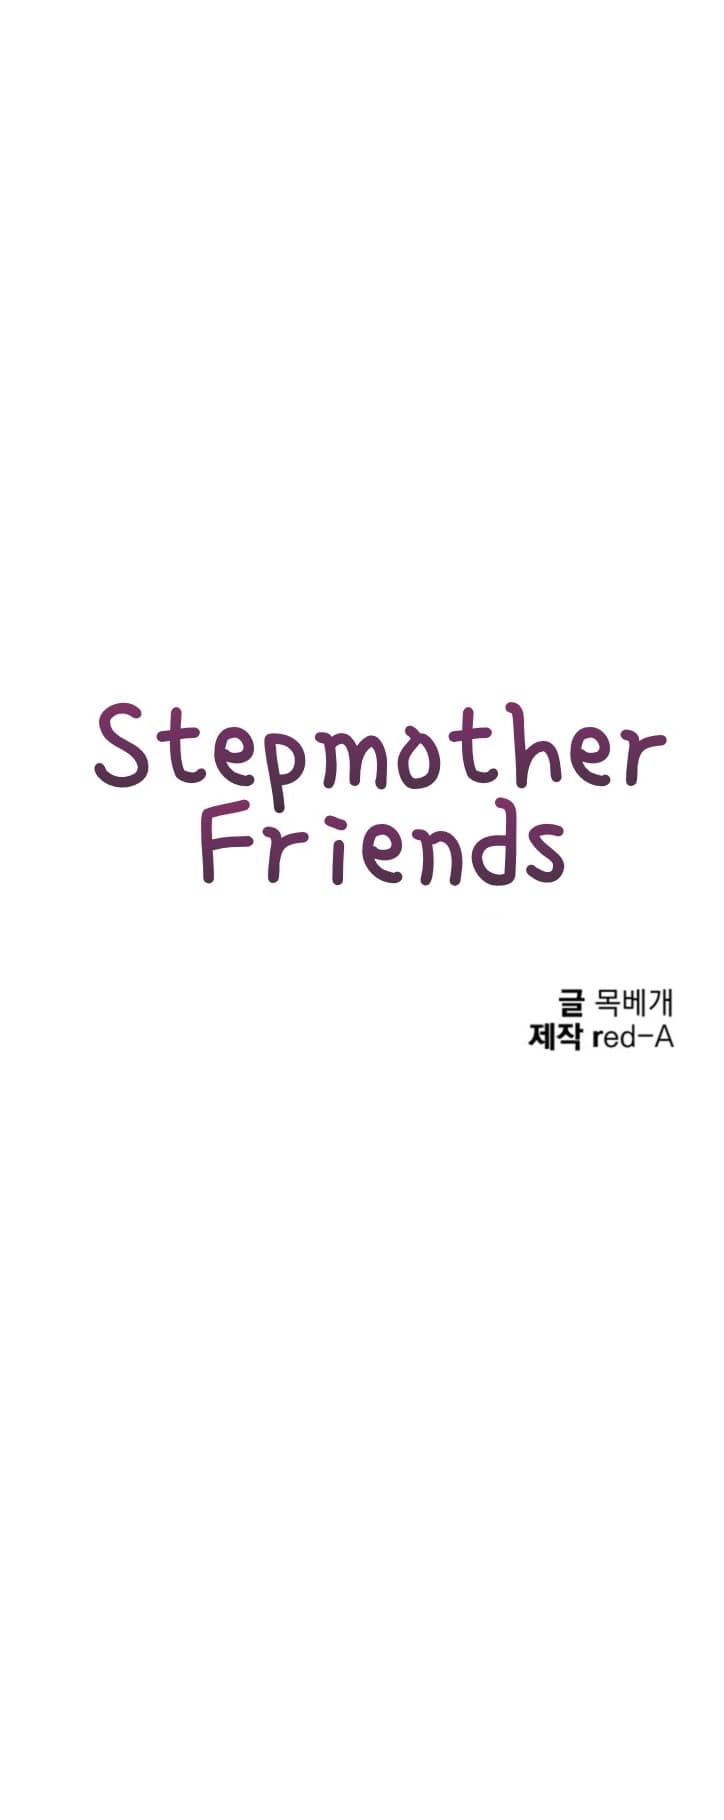 Stepmother Friends 4 (2)